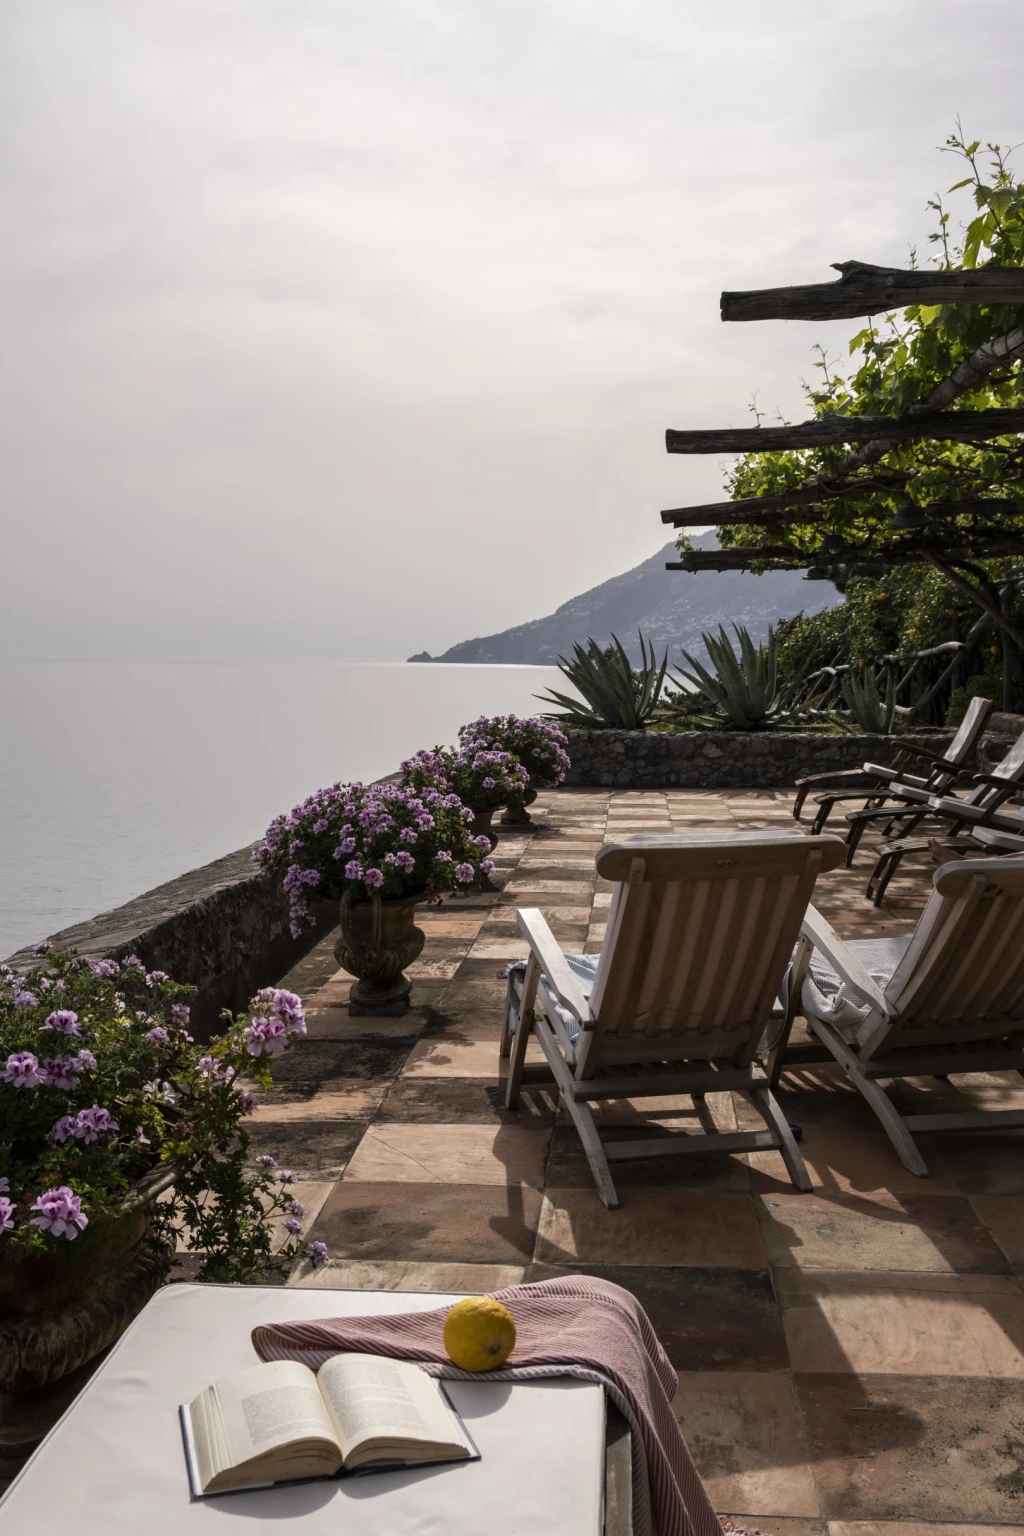 The best place on the Amalfi Coast!